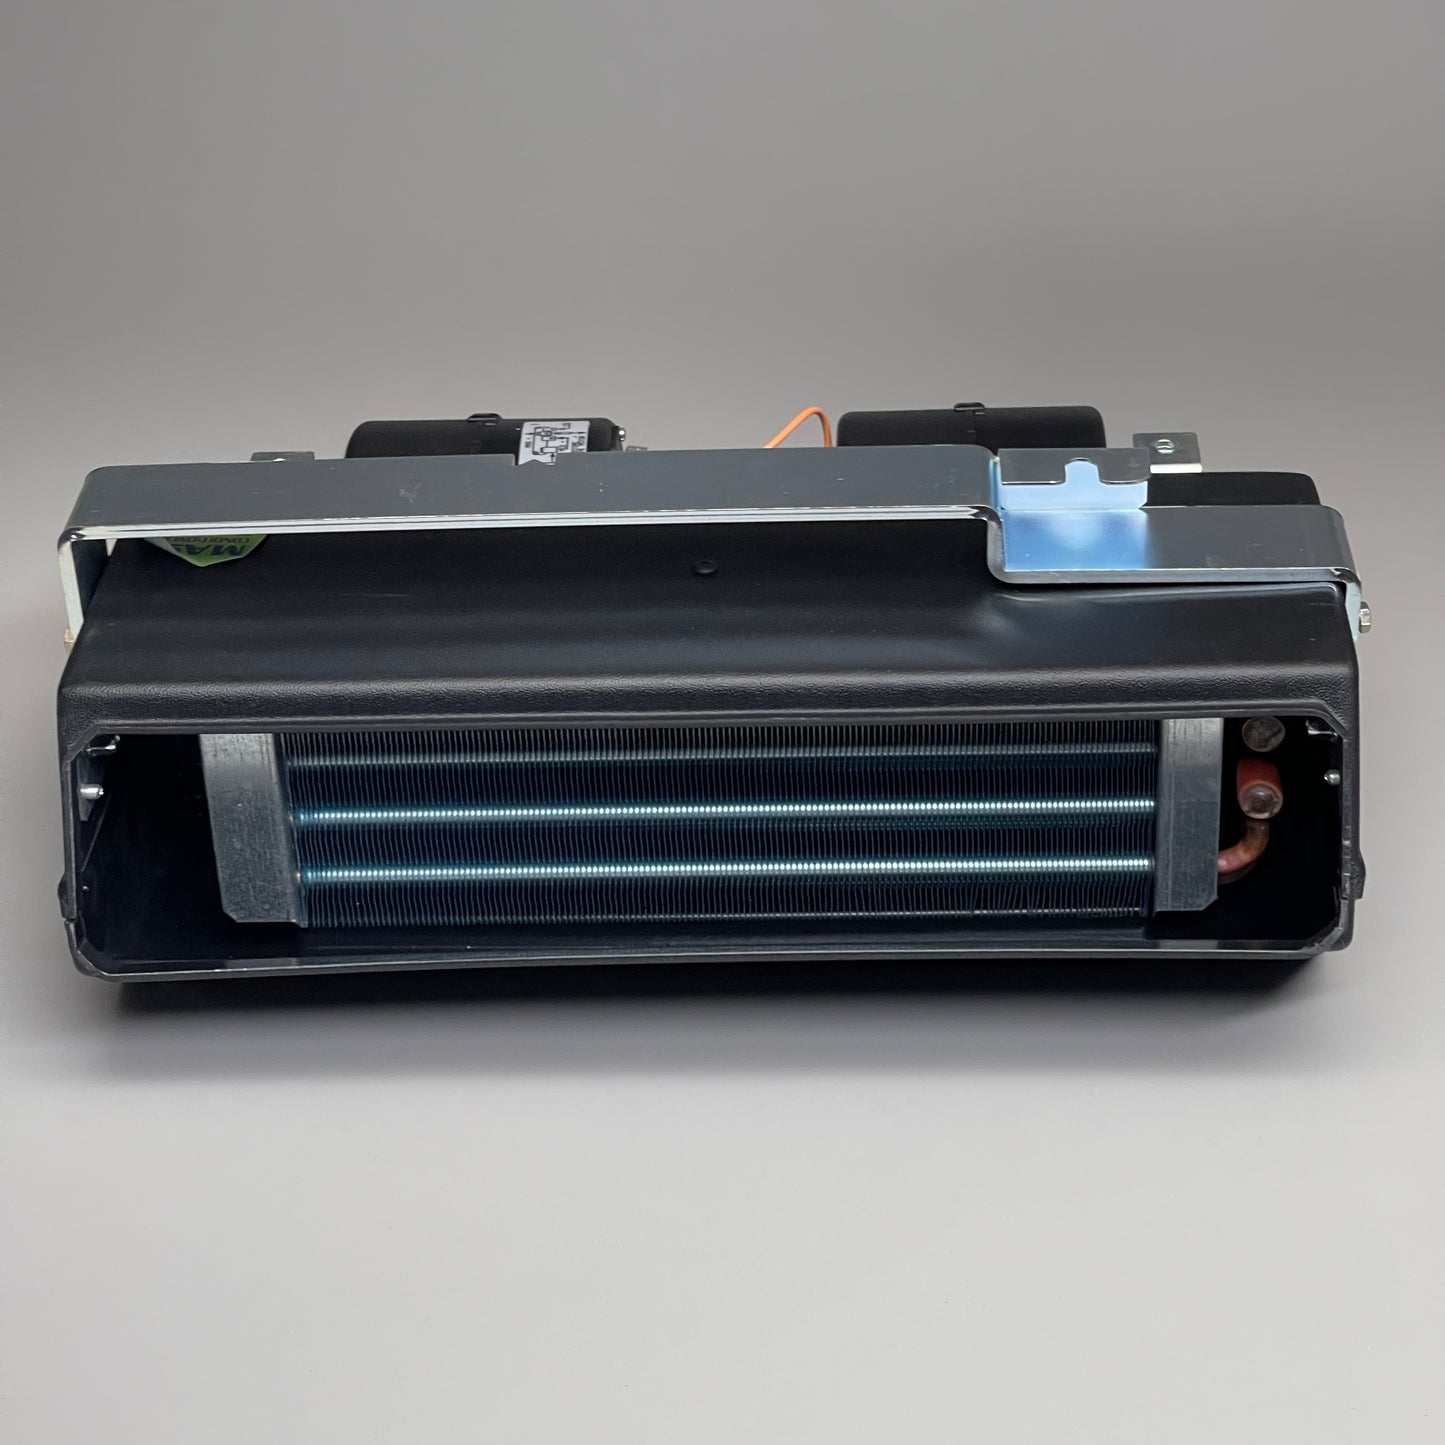 GENIE Universal Underdash A/C Evaporator Heater & Cooling Unit OEM 07.0723.0397 (New)